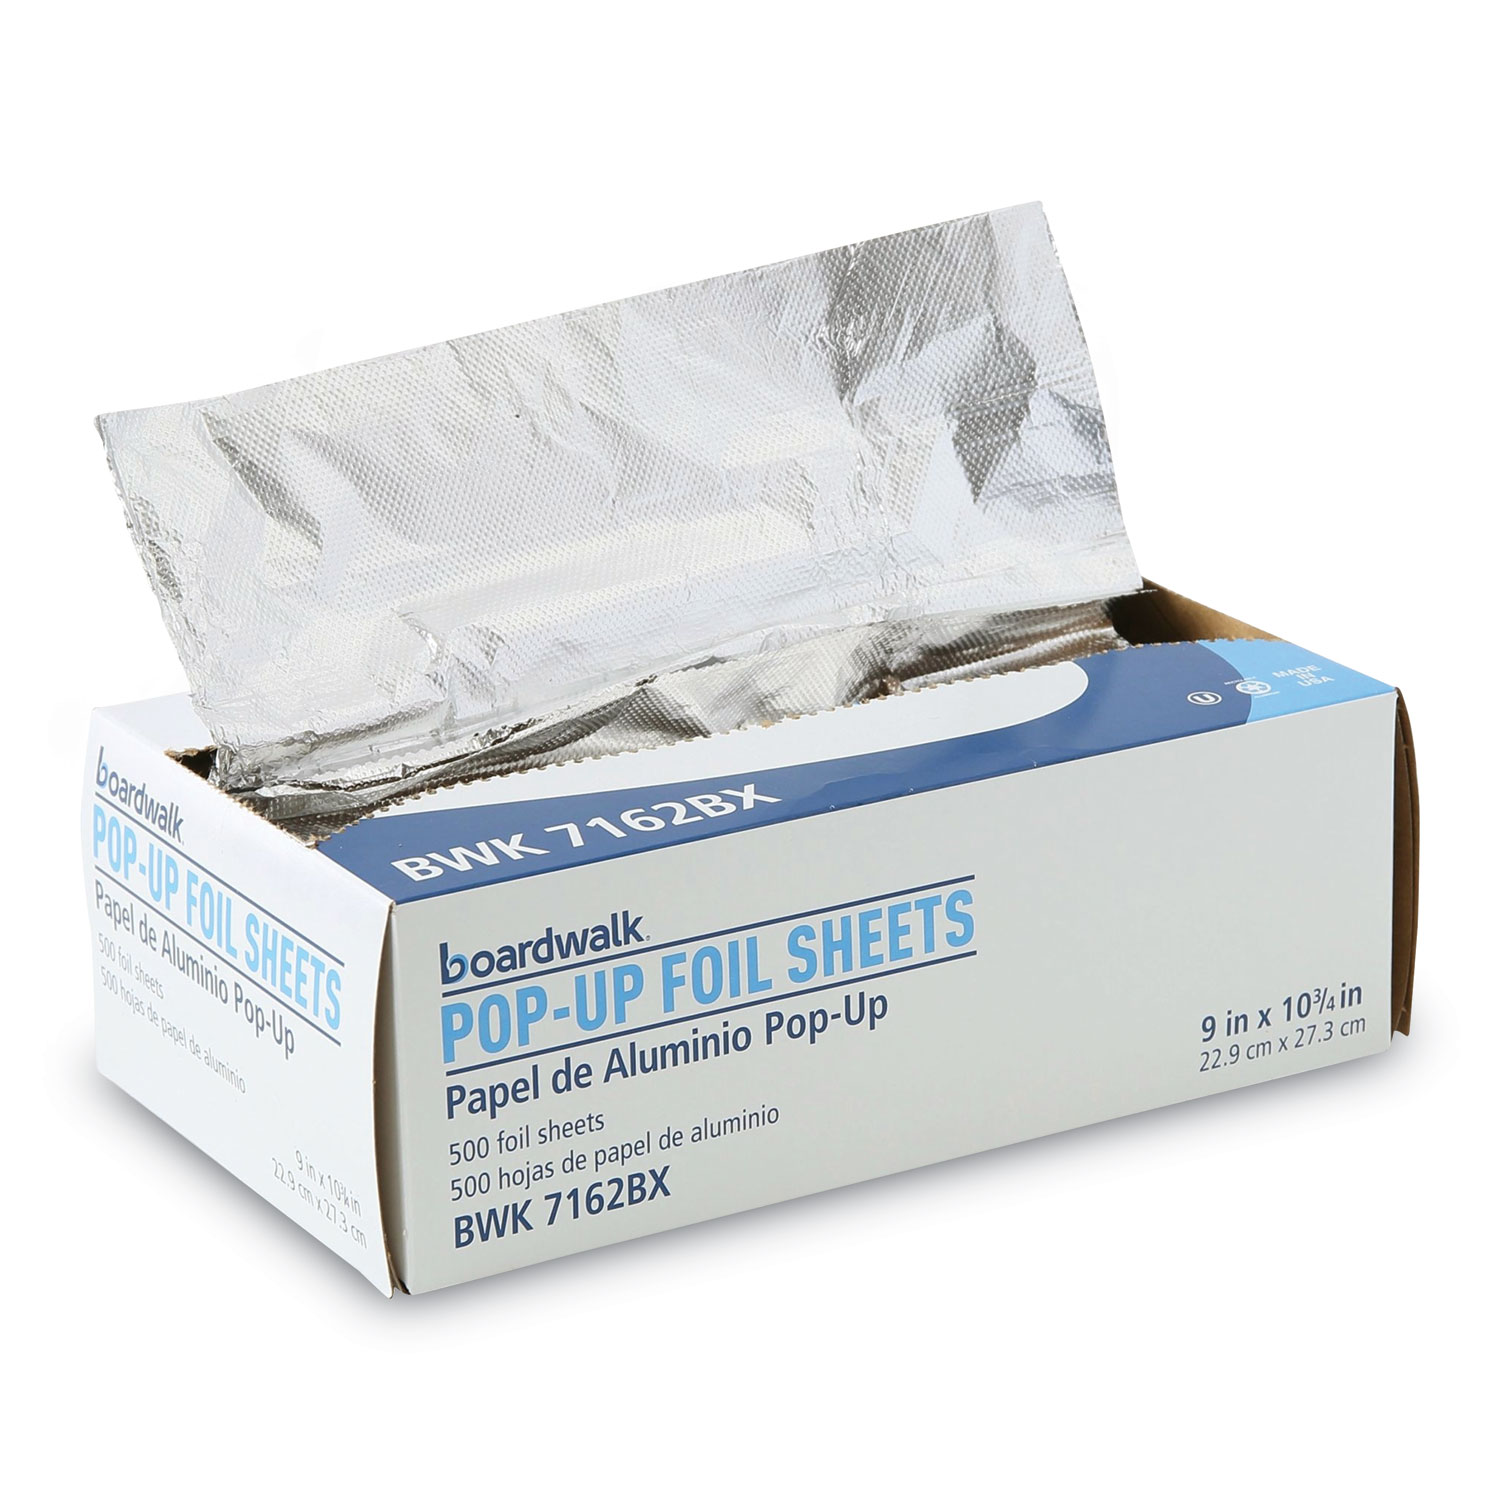 RW Base Foodservice Heavy-Duty Aluminum Foil Pop-Up Sheet - Interfolded -  9 x 10 3/4 - 500 count box